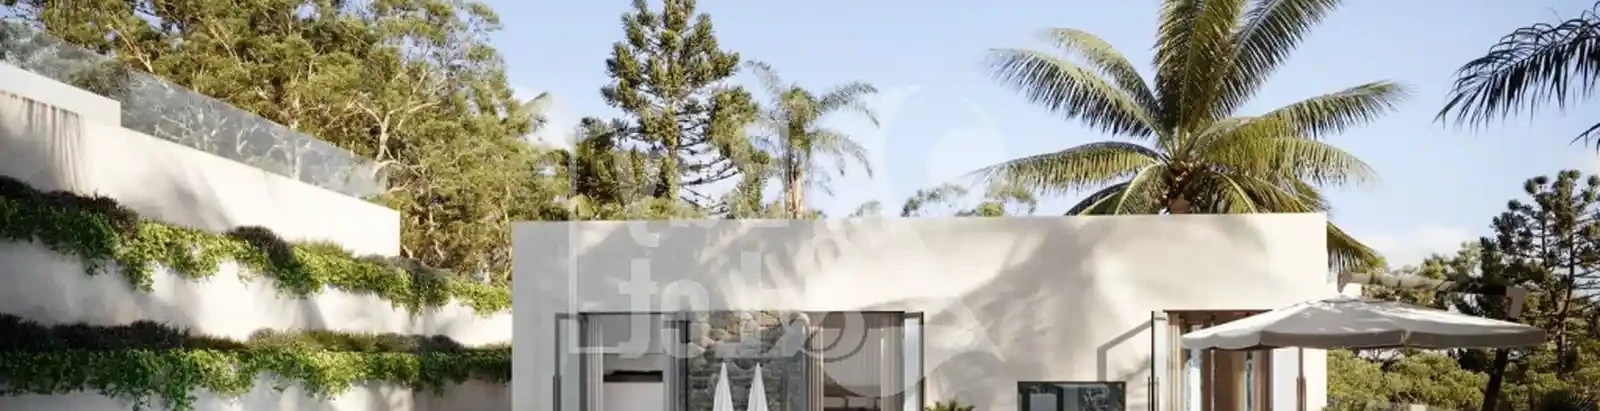 3-bedroom villa fоr sаle €535.000, image 1